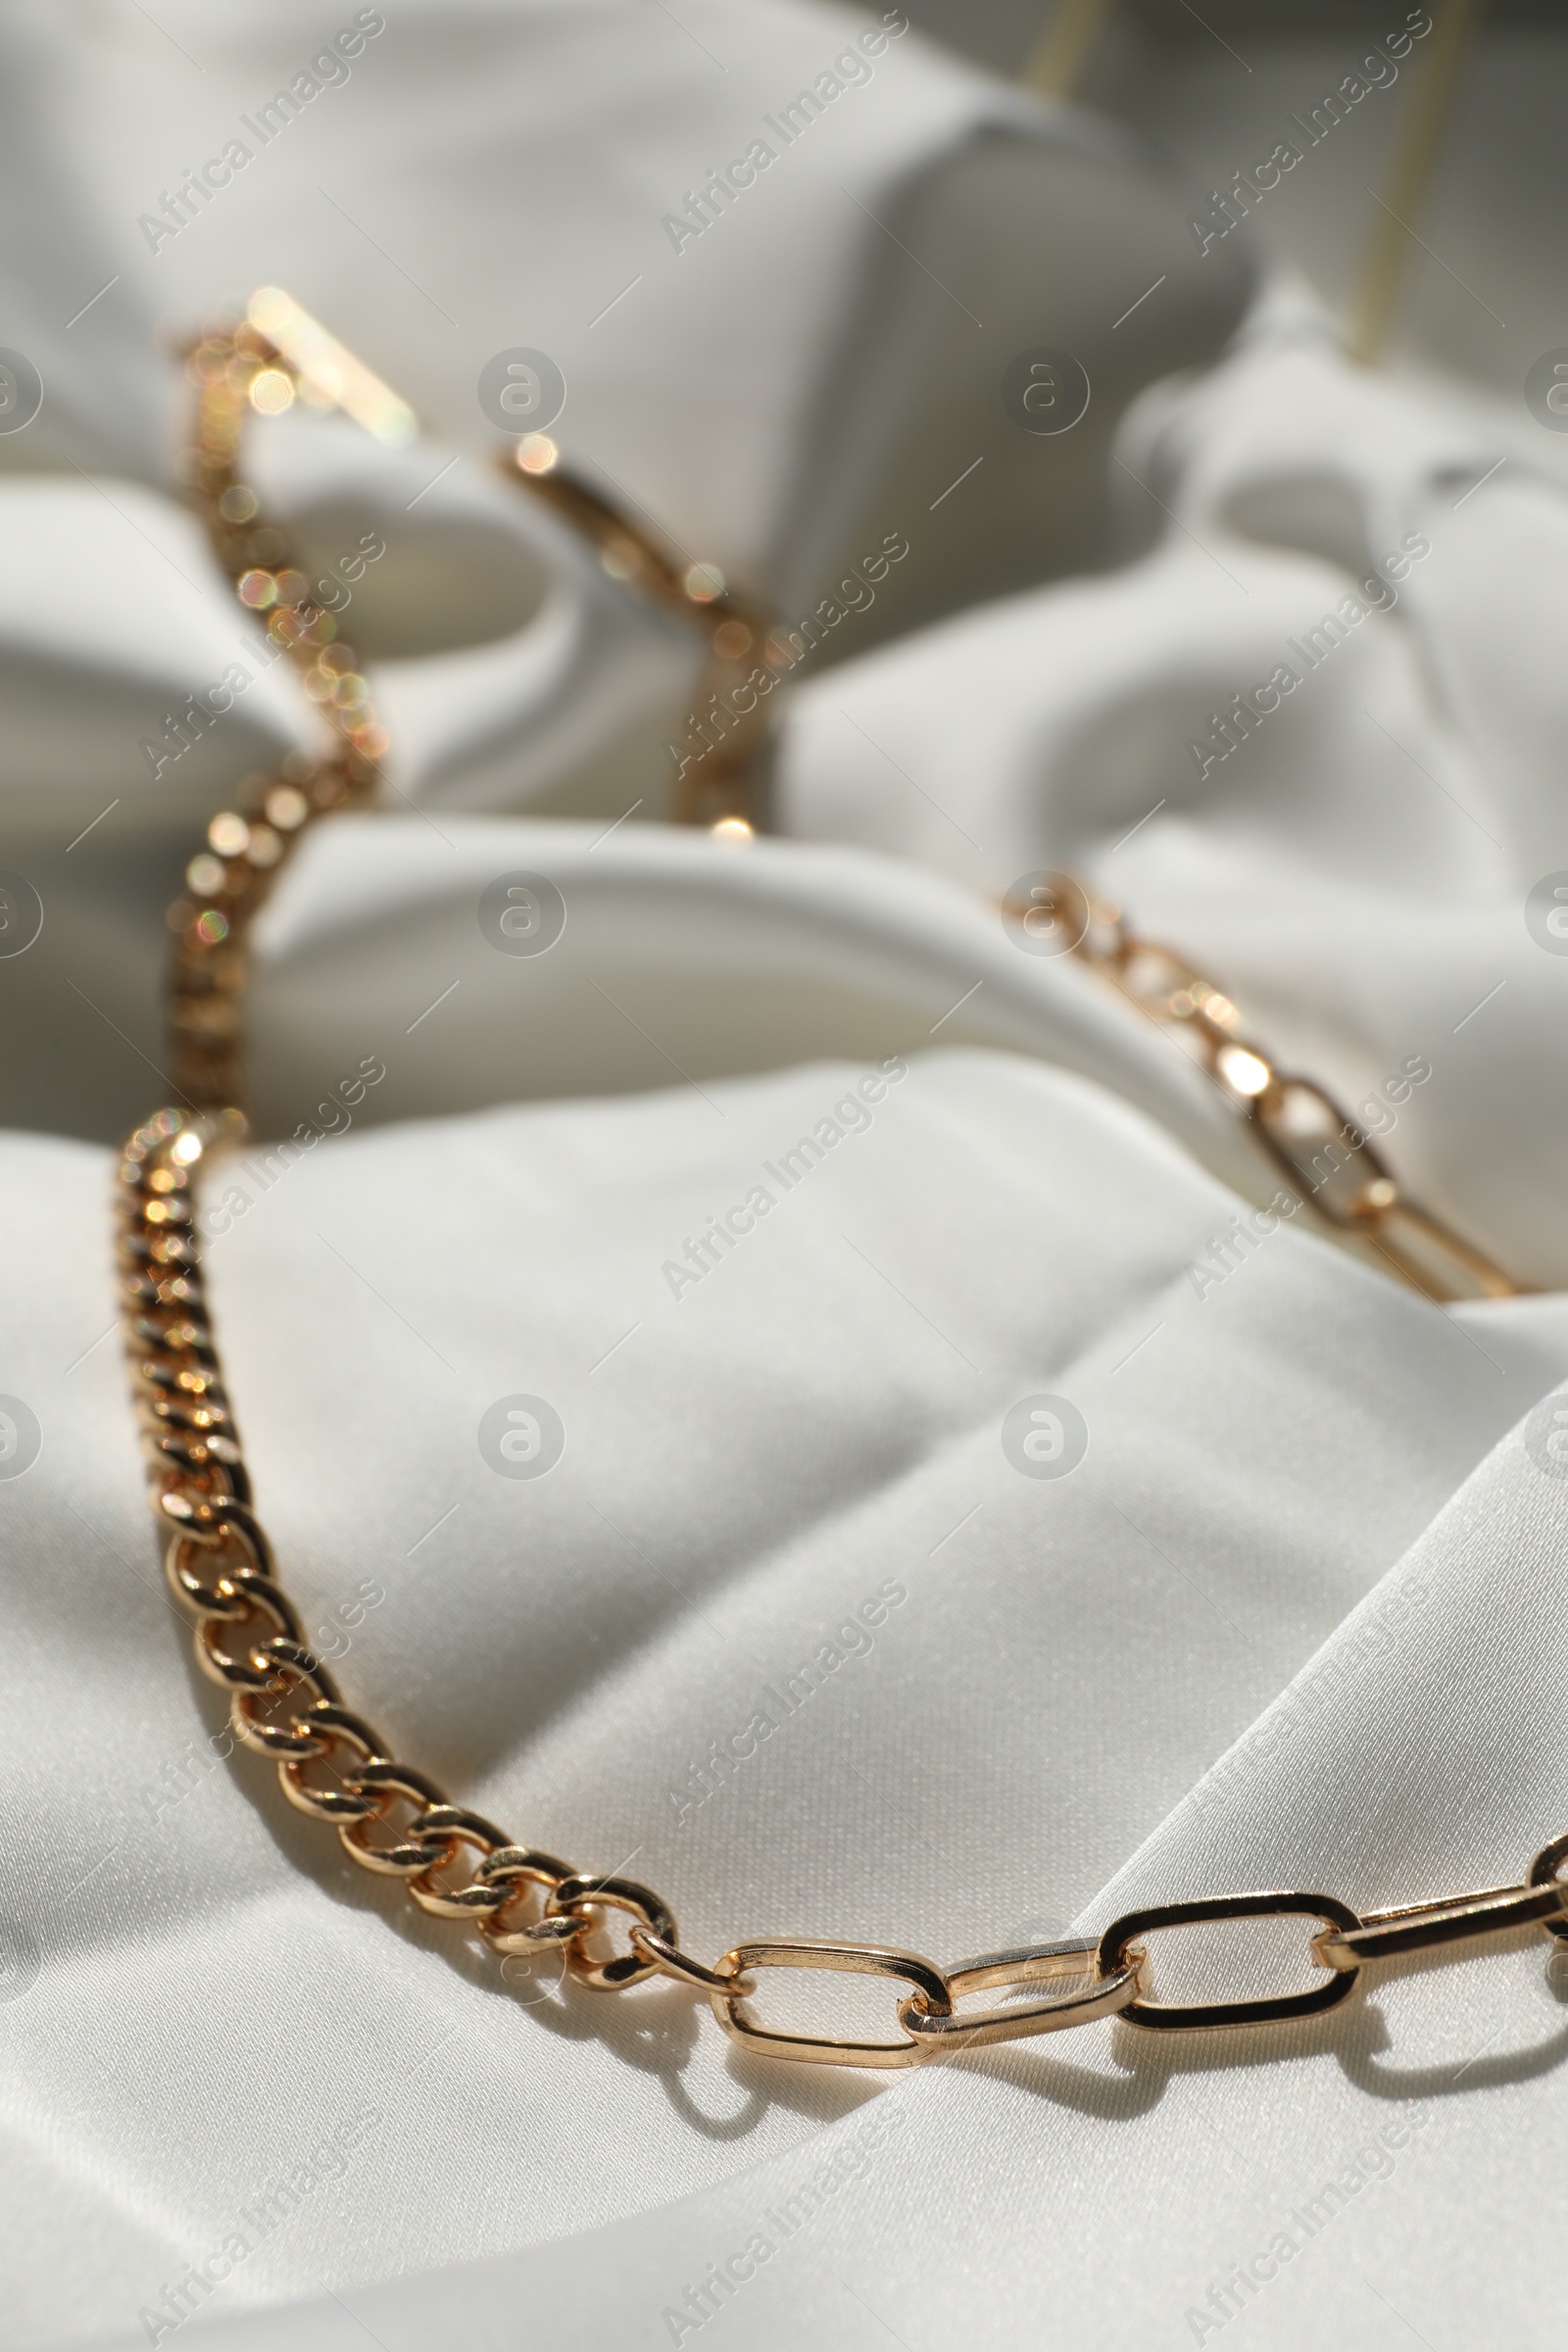 Photo of Metal chain on white fabric, closeup. Luxury jewelry